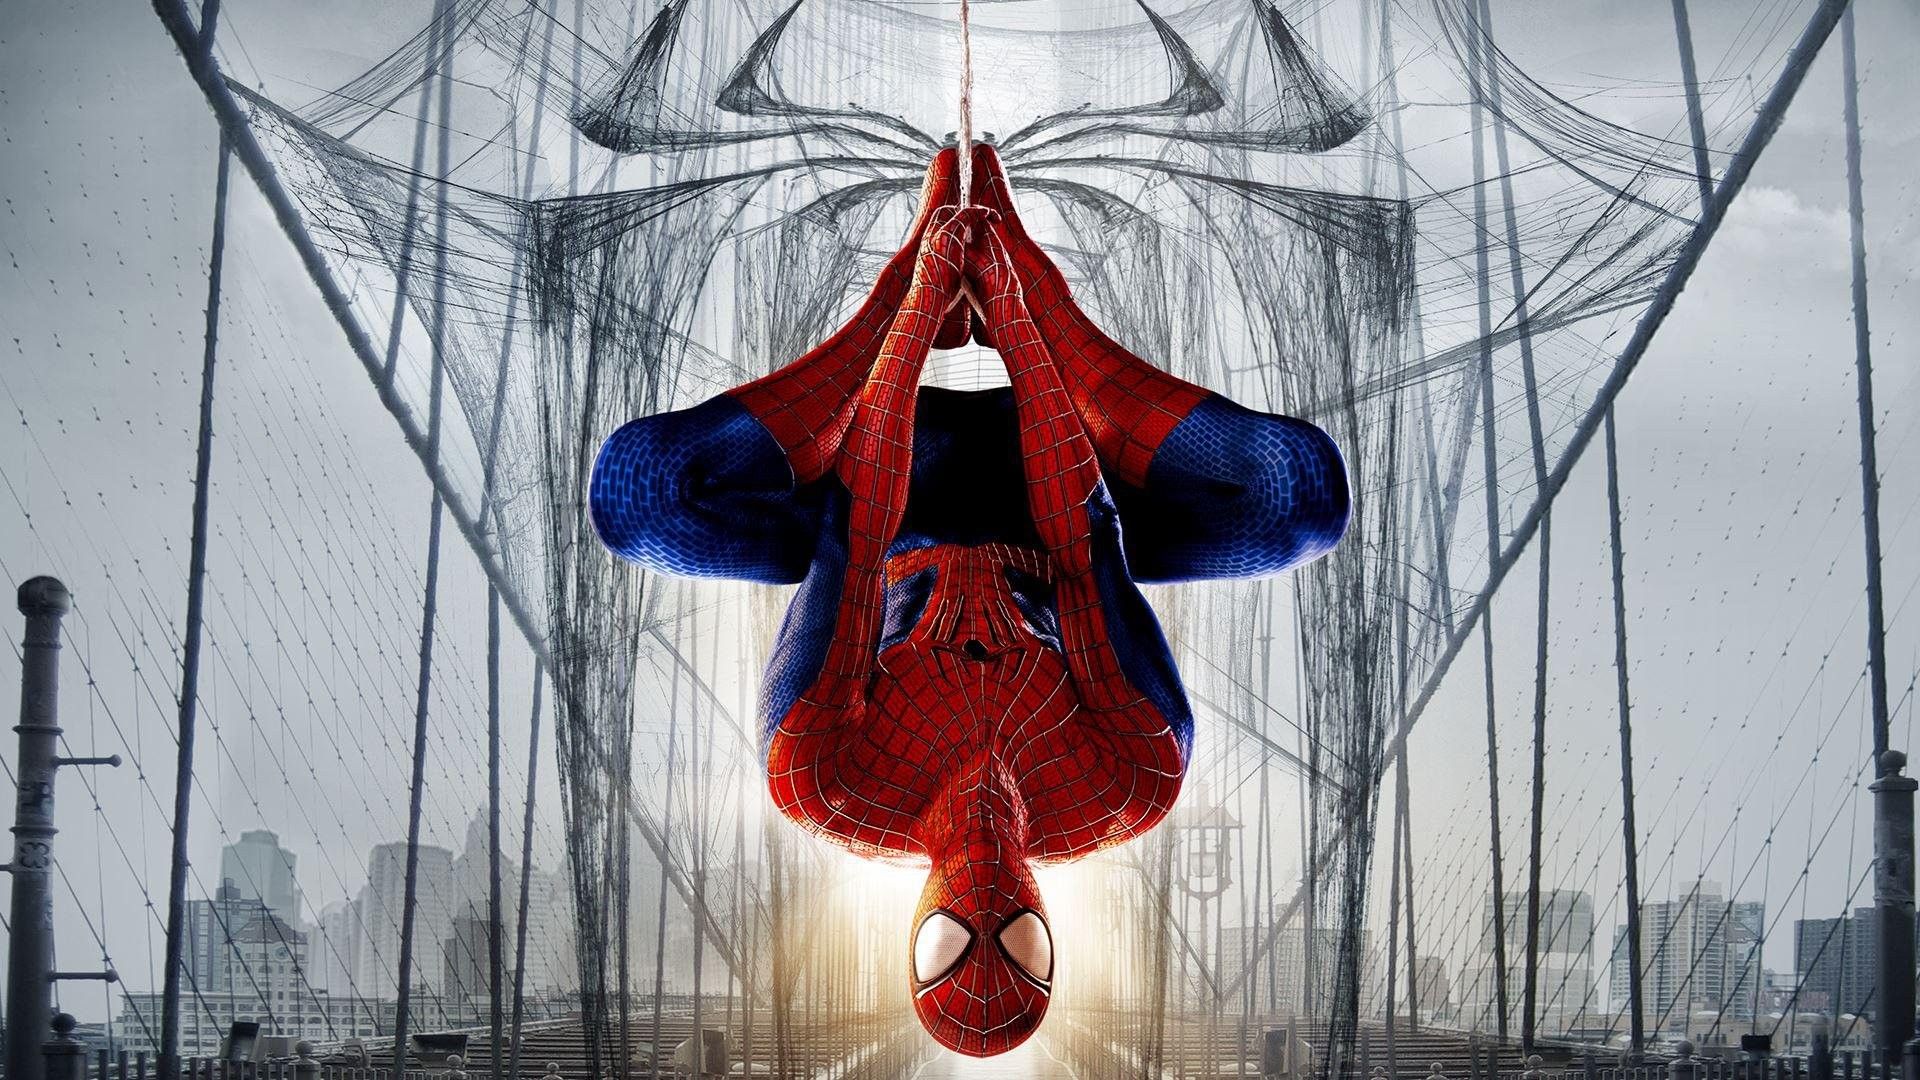 Spider Man WallpaperDownload Free Stunning Full HD Wallpaper